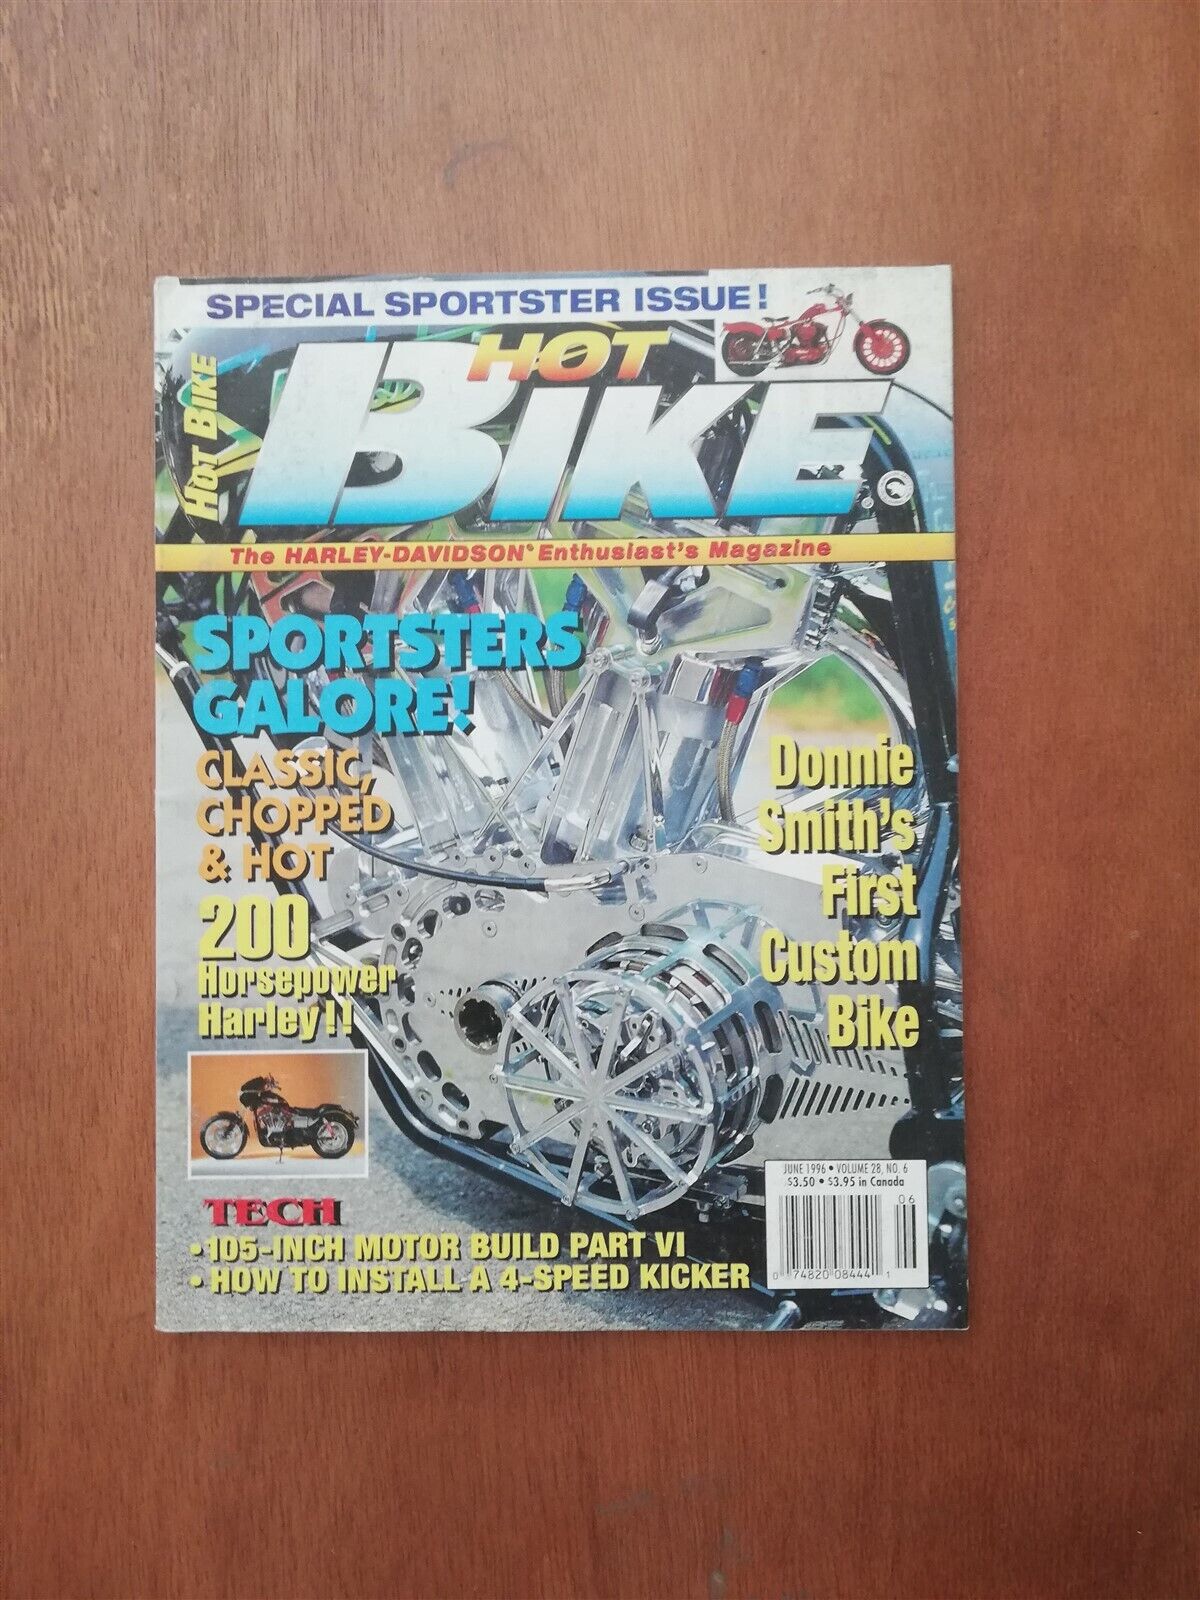 Hot Bike Harley Davidson Magazine June 1996 Special Sportster Issue - Arlen Ness